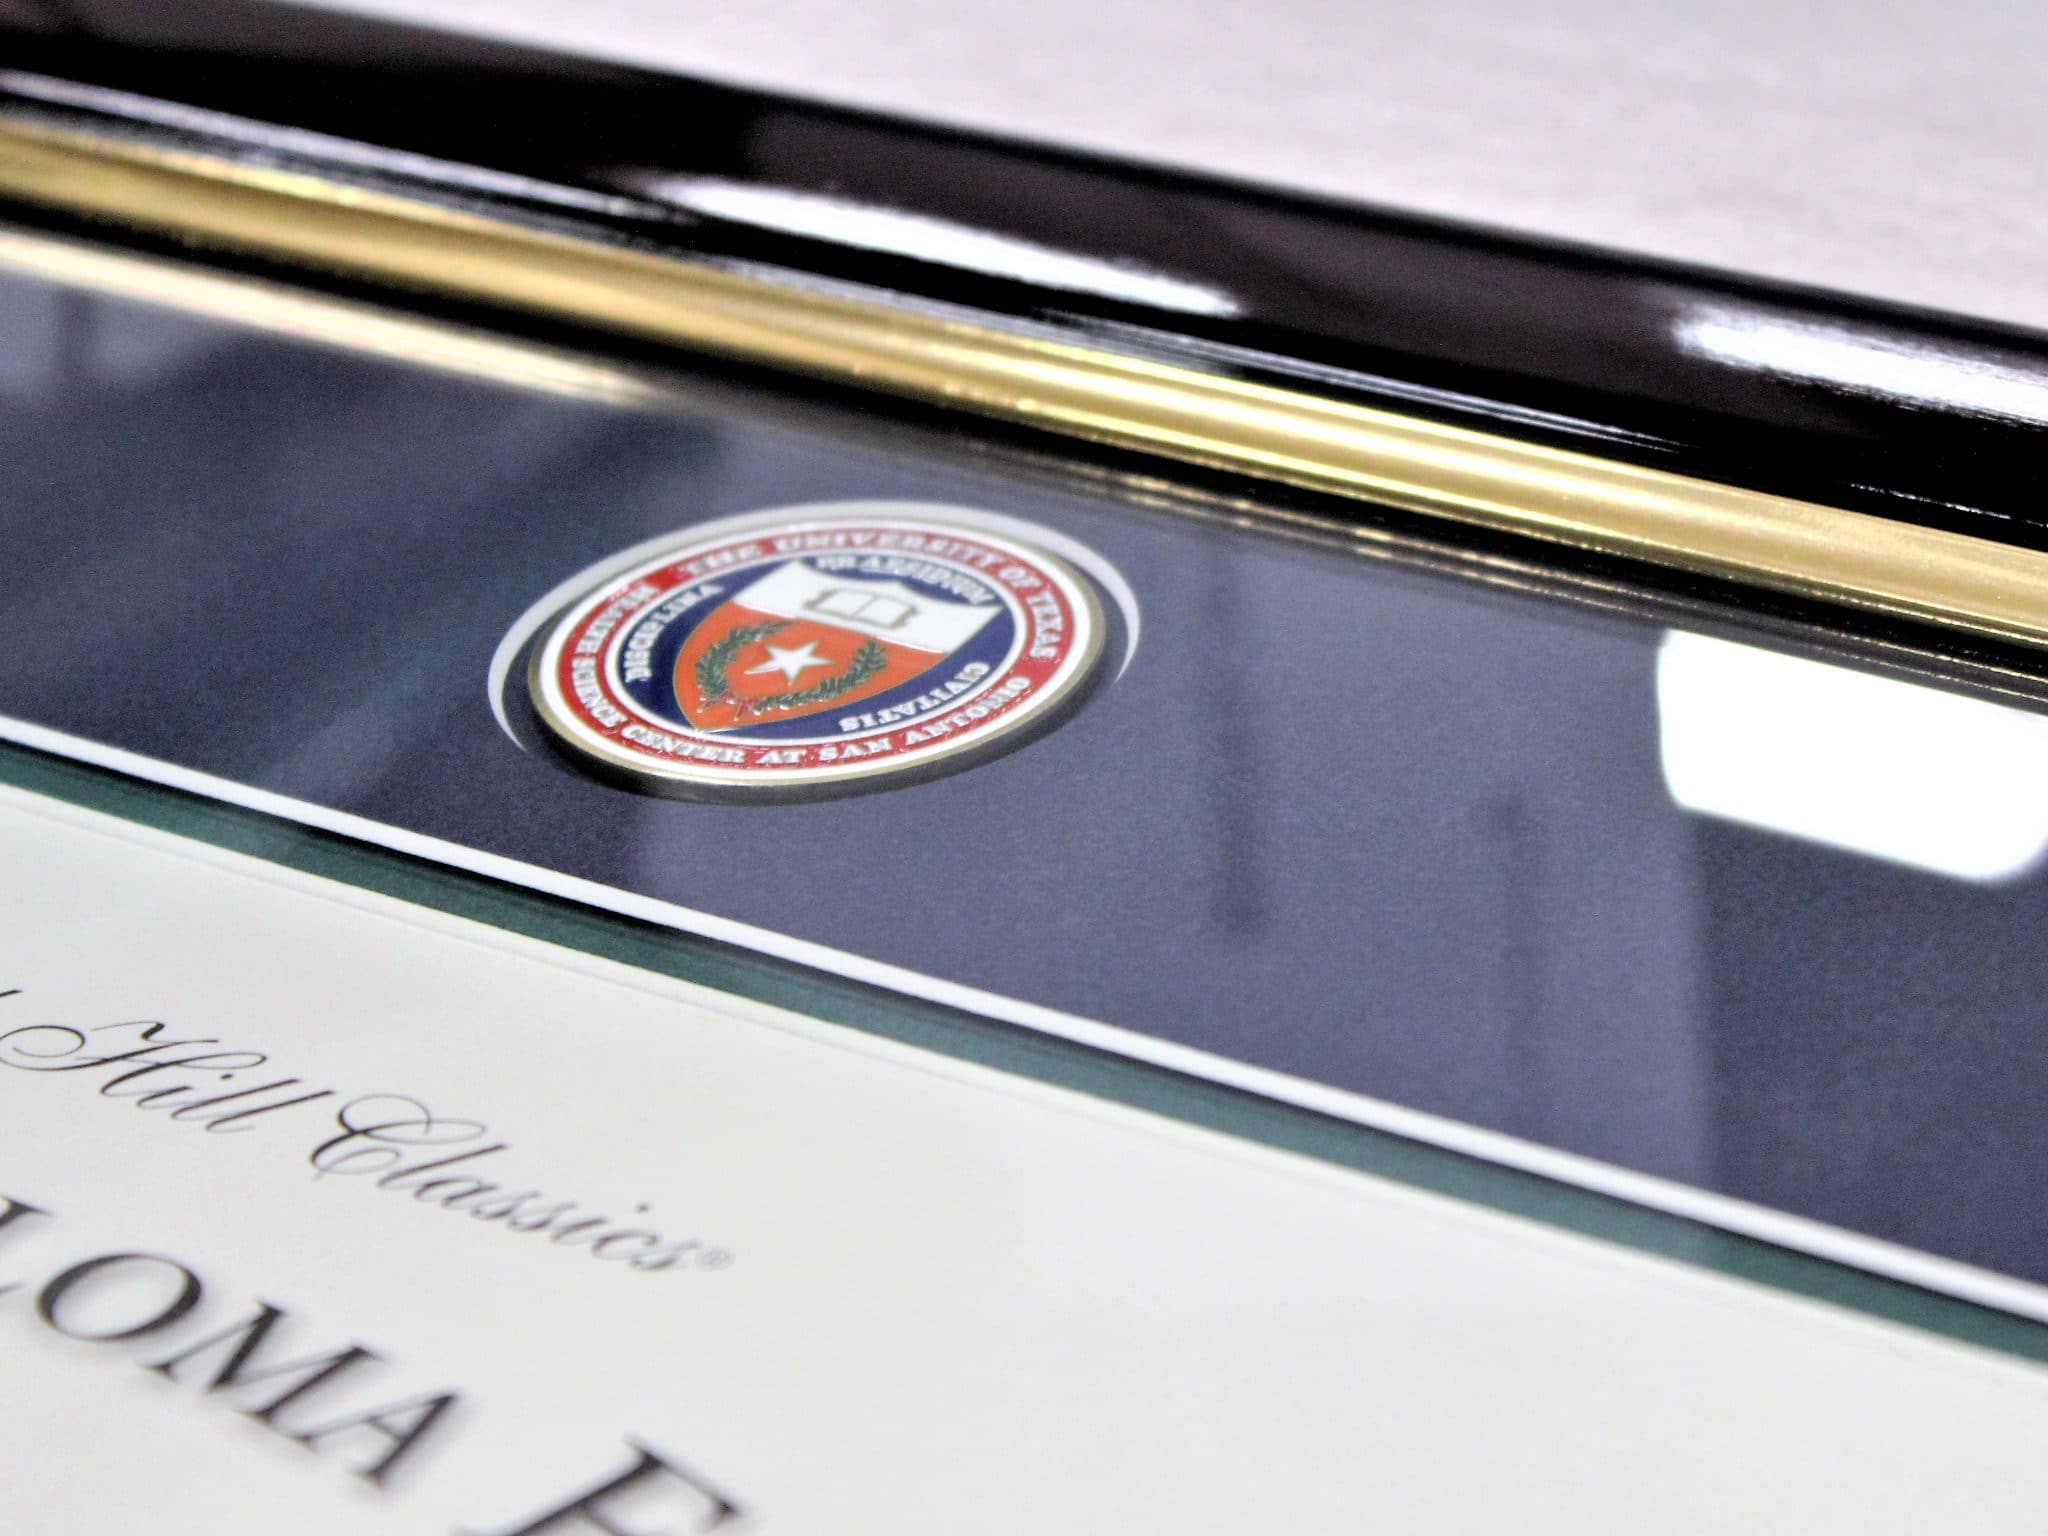 close up of church hill classics diploma frame